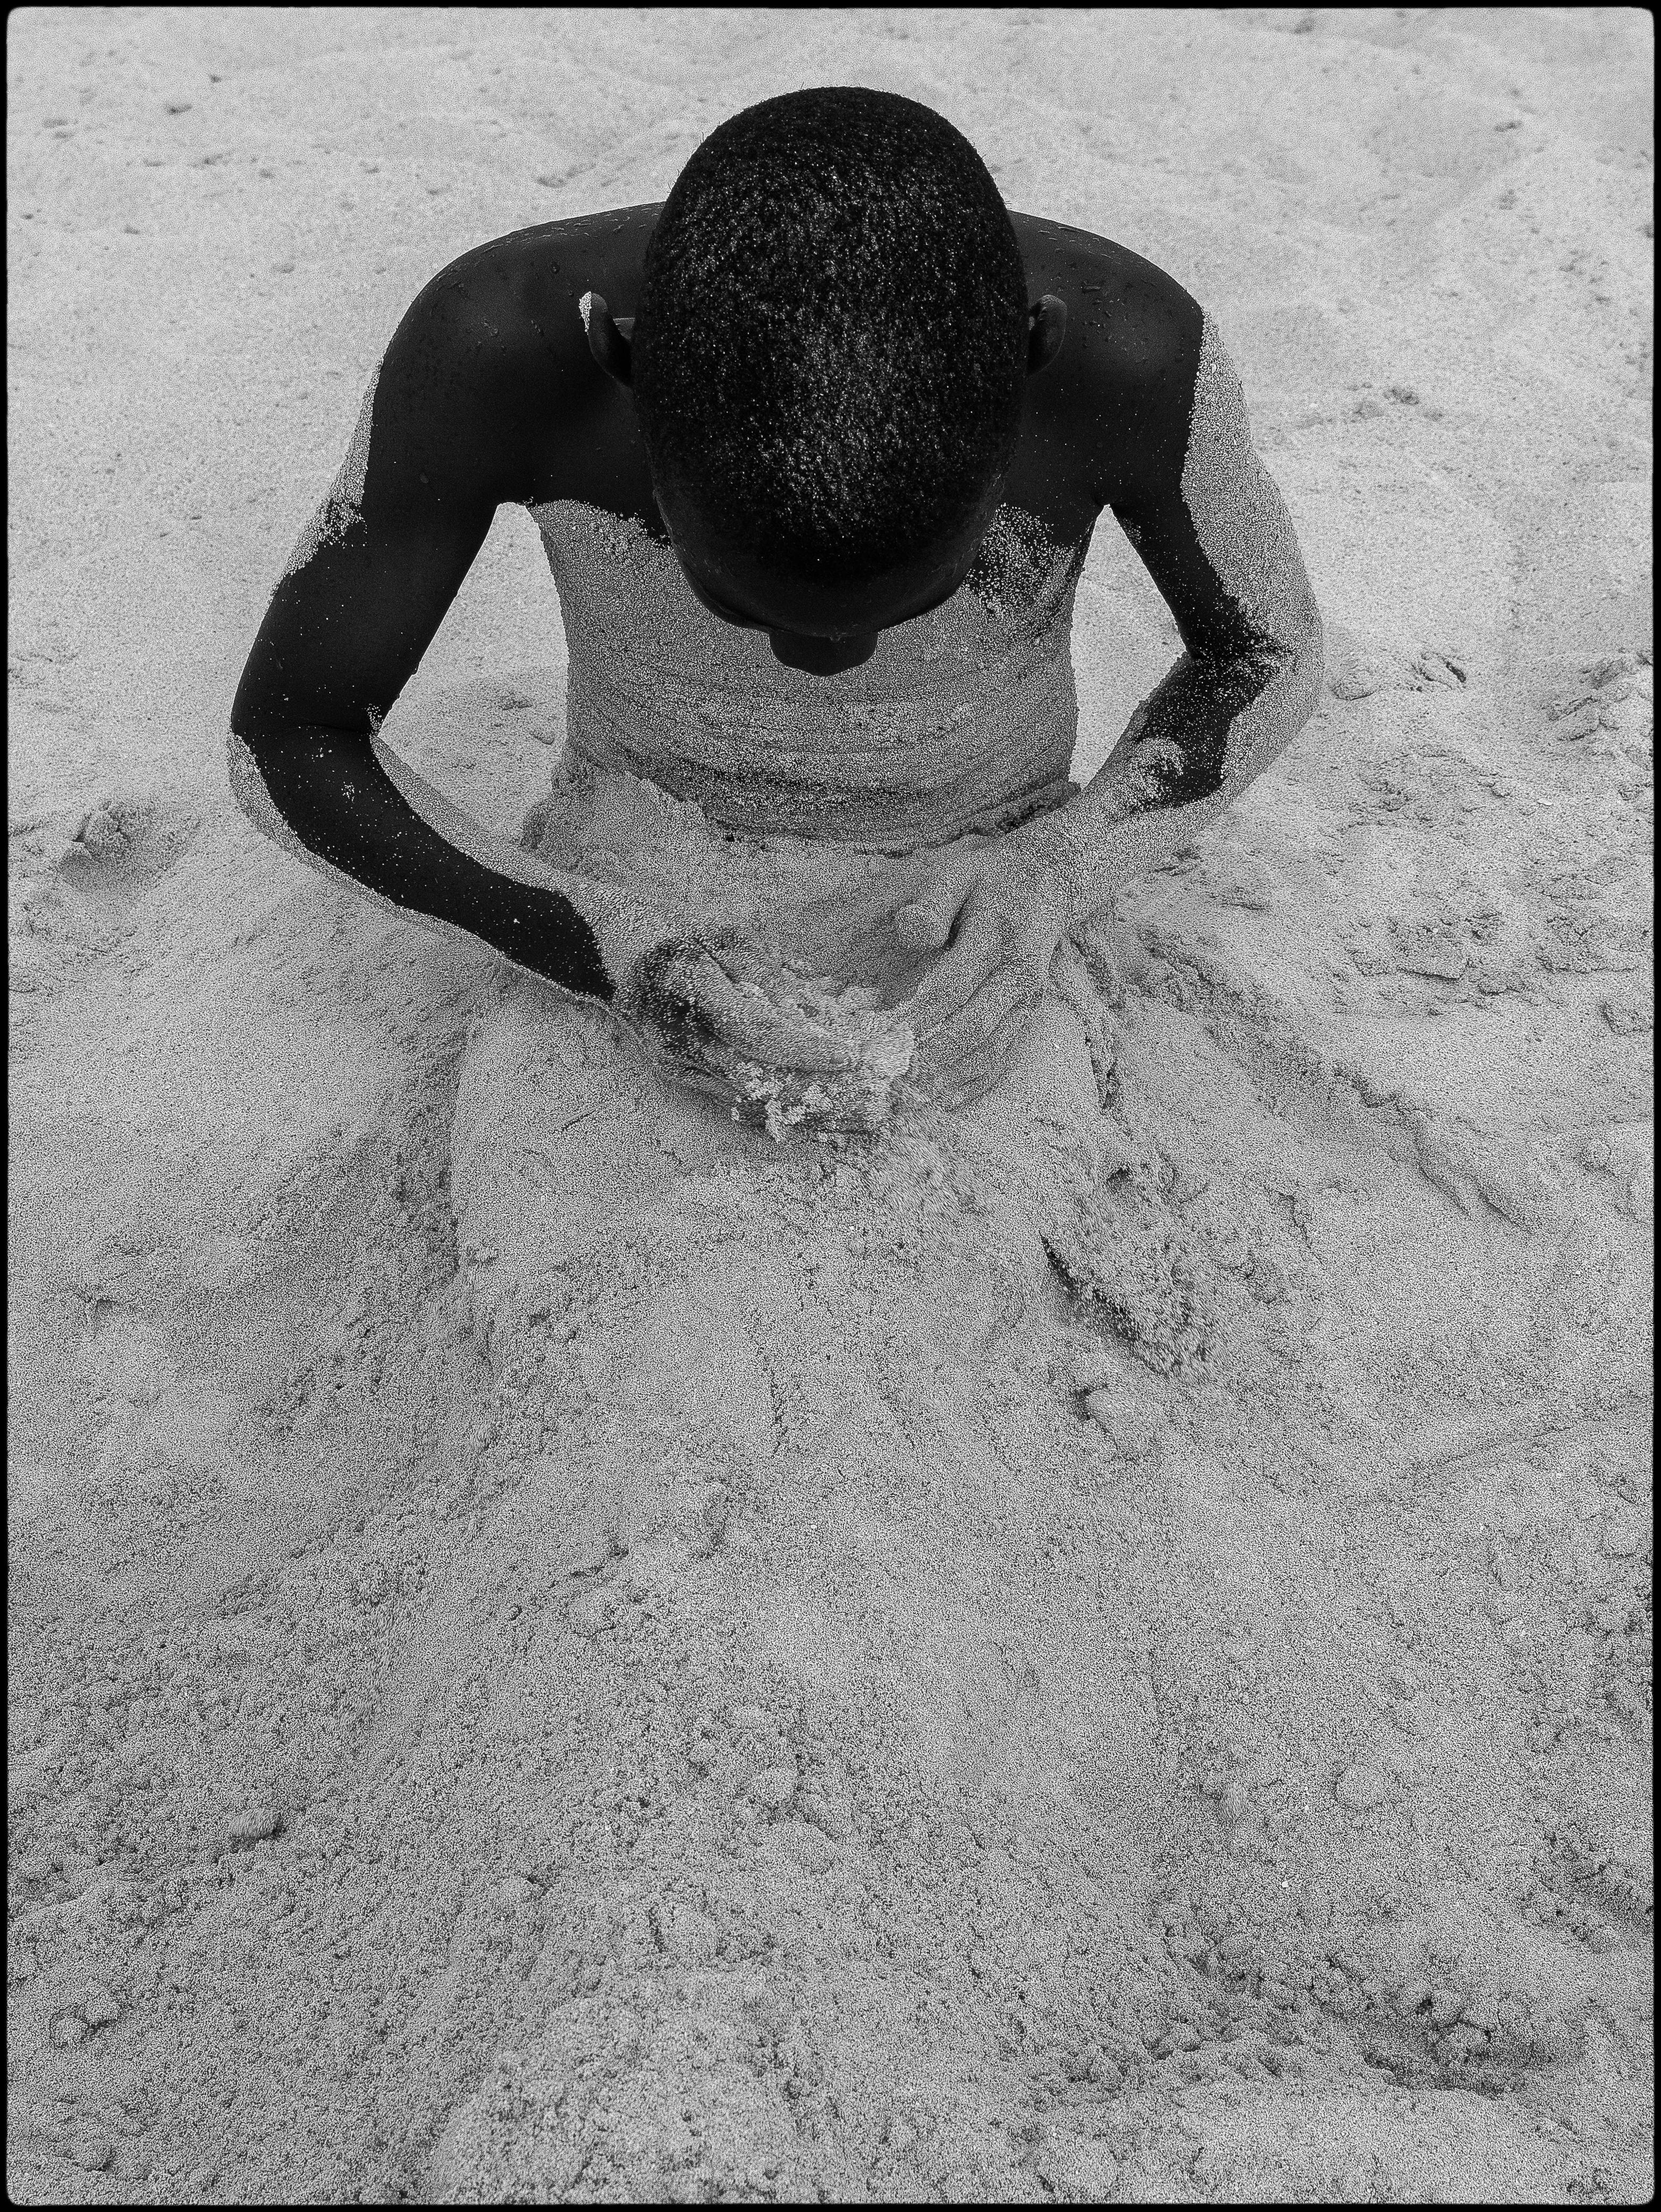 James Hayman Black and White Photograph - Boy on Beach, Anguilla (framed)